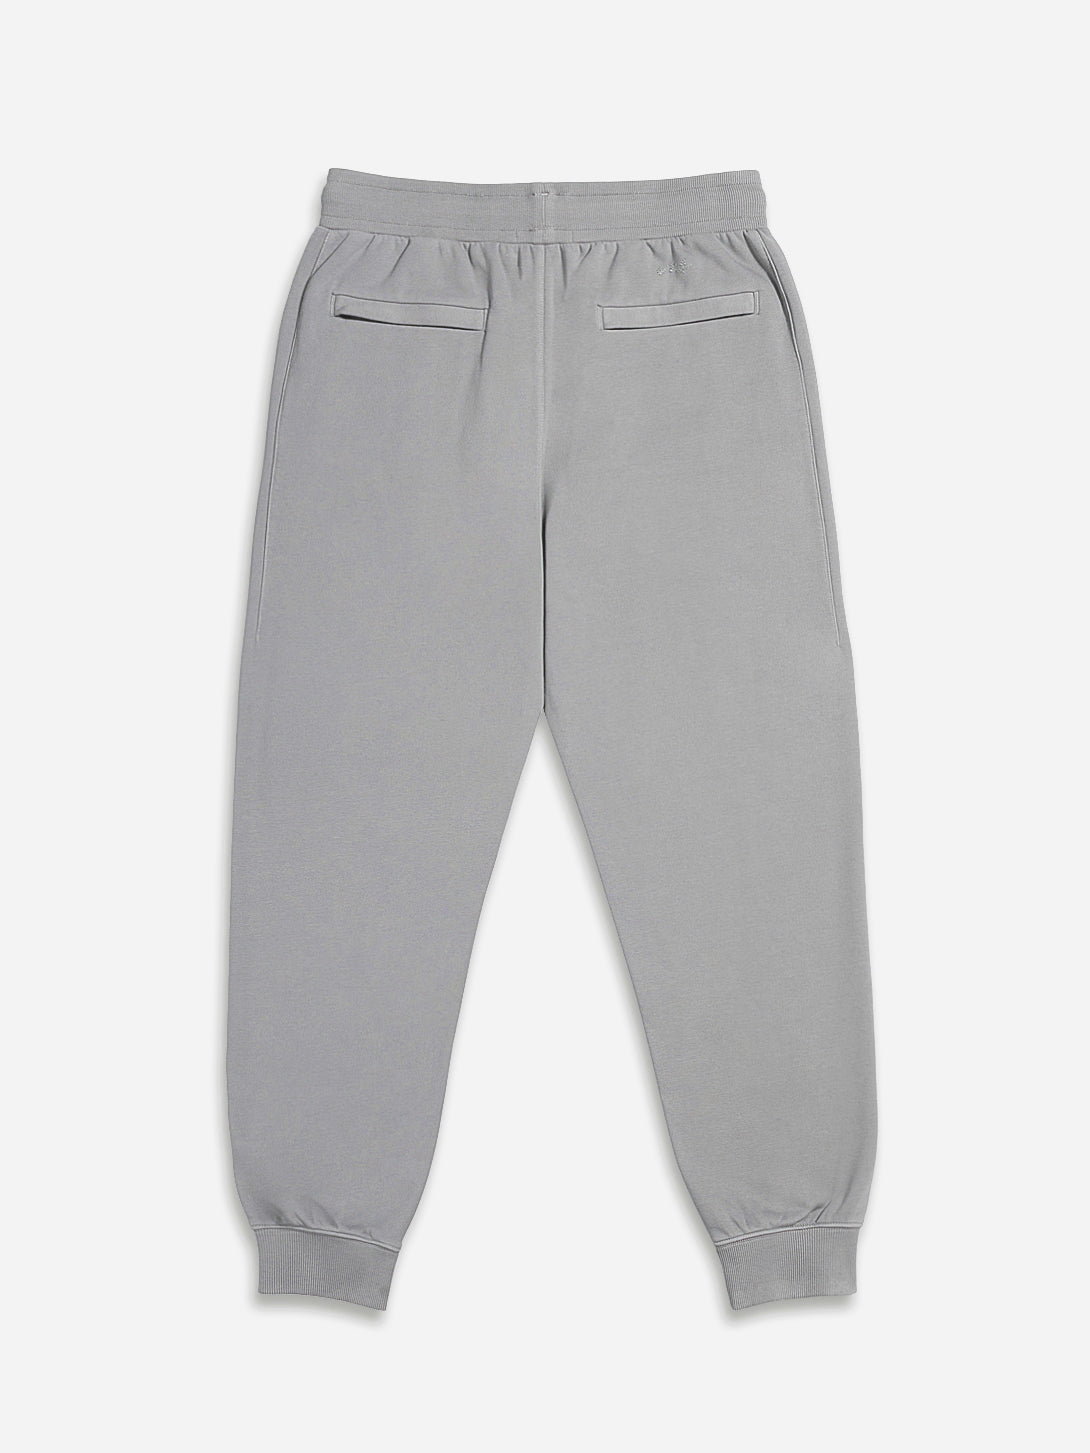 Grey Bklyn Jogger O.N.S Clothing Menswear Joggers Sweatpants SS 22 Spring/Summer 22 NYC